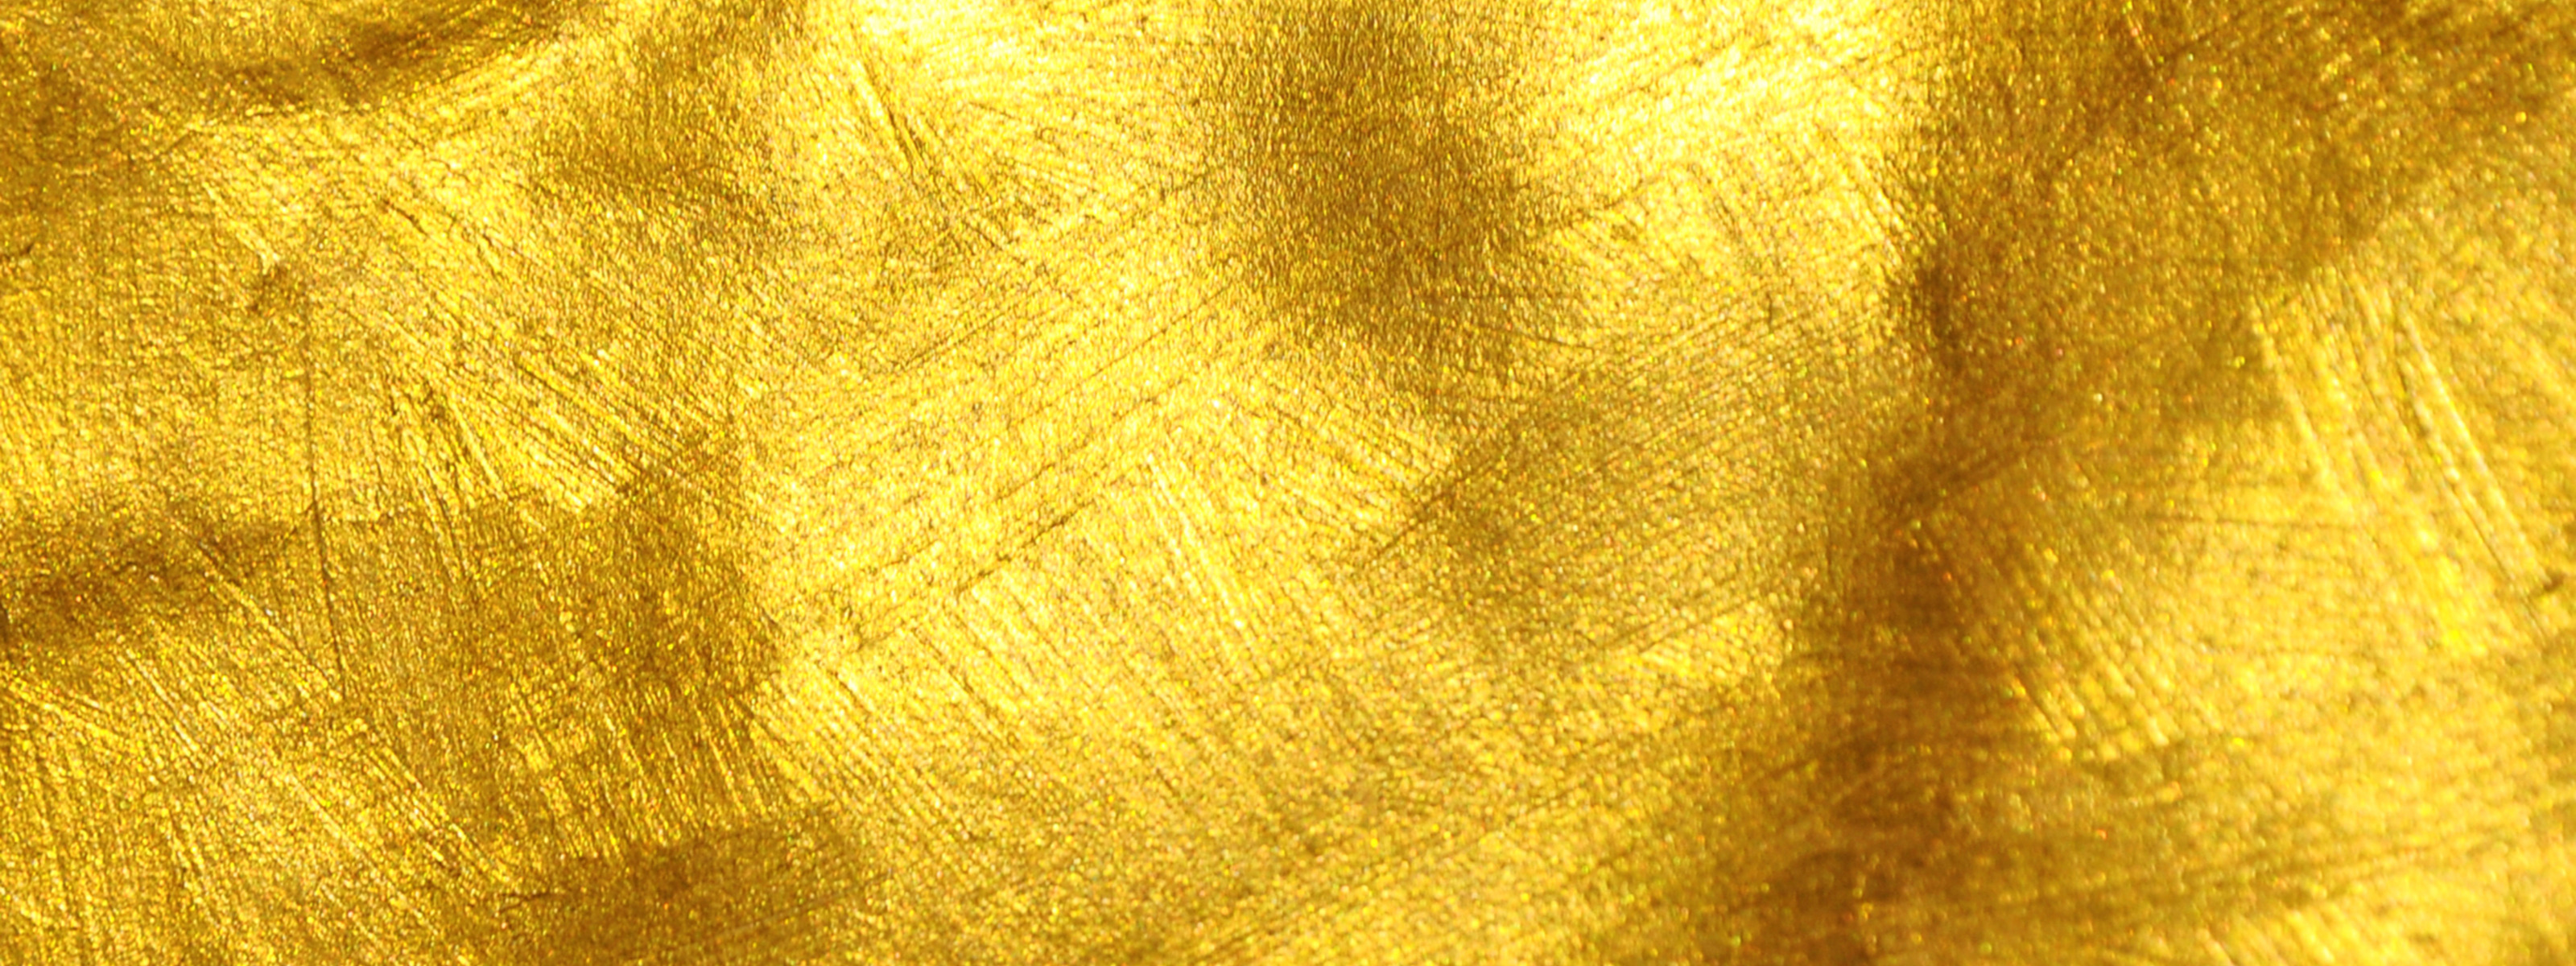 Золотой цвет кожи. Золото текстура. Золотистый фон. Золото материал. Фактура золото металл.